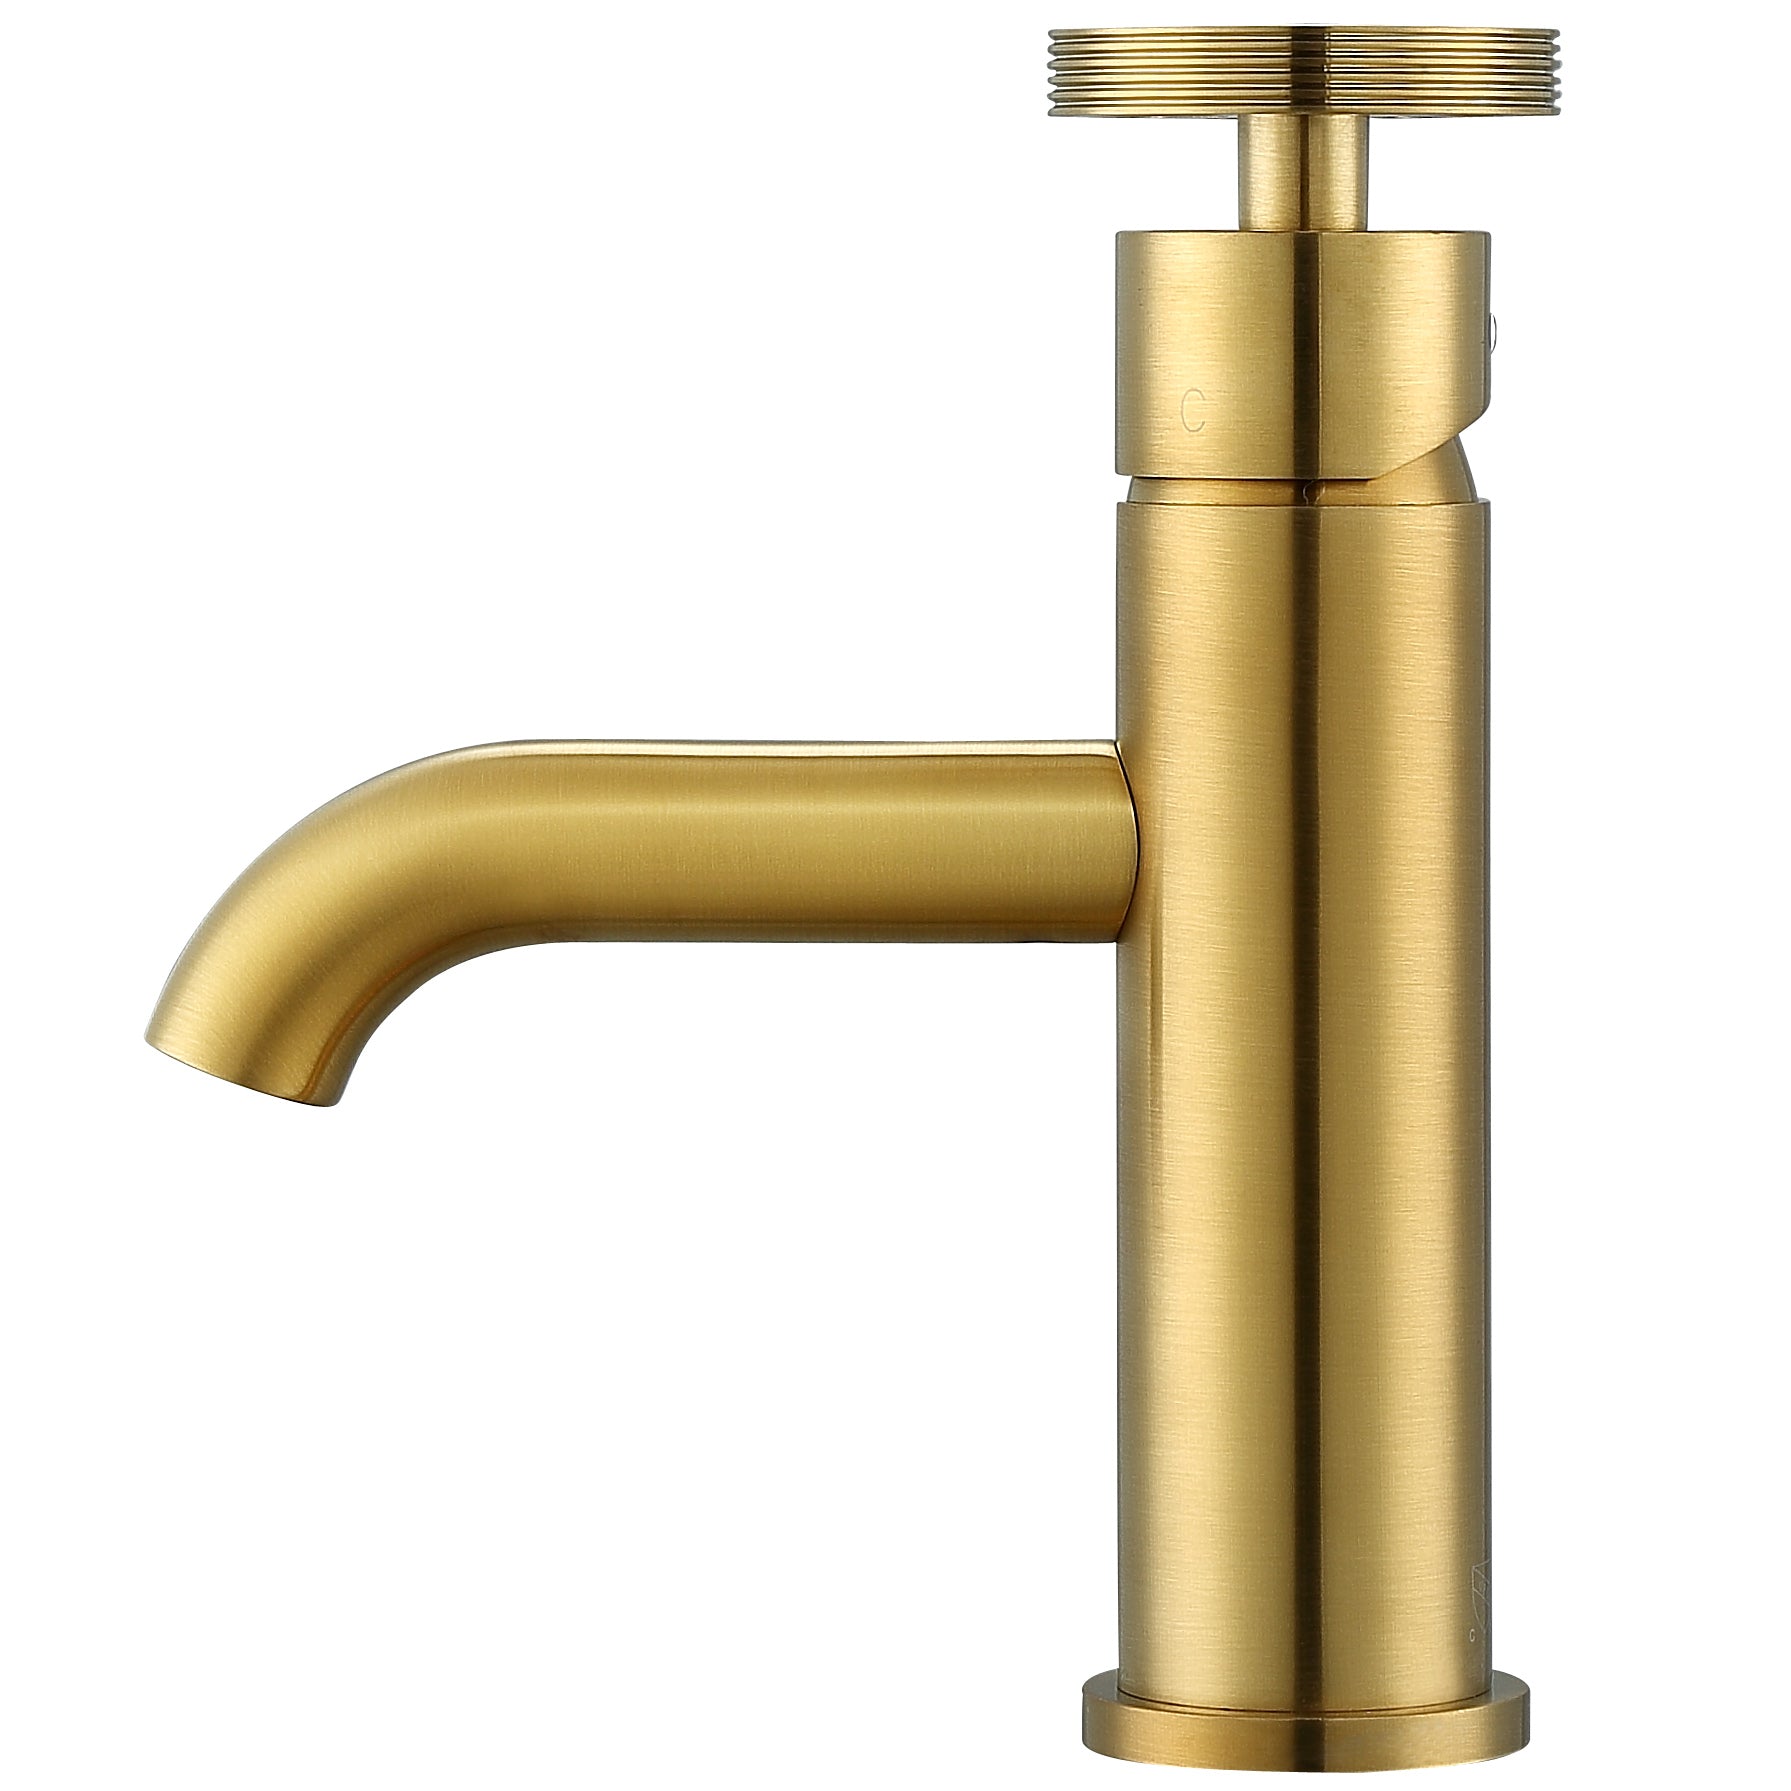 Ancona robinet de salle de bain monocommande de la gamme Nova en titane doré brossé